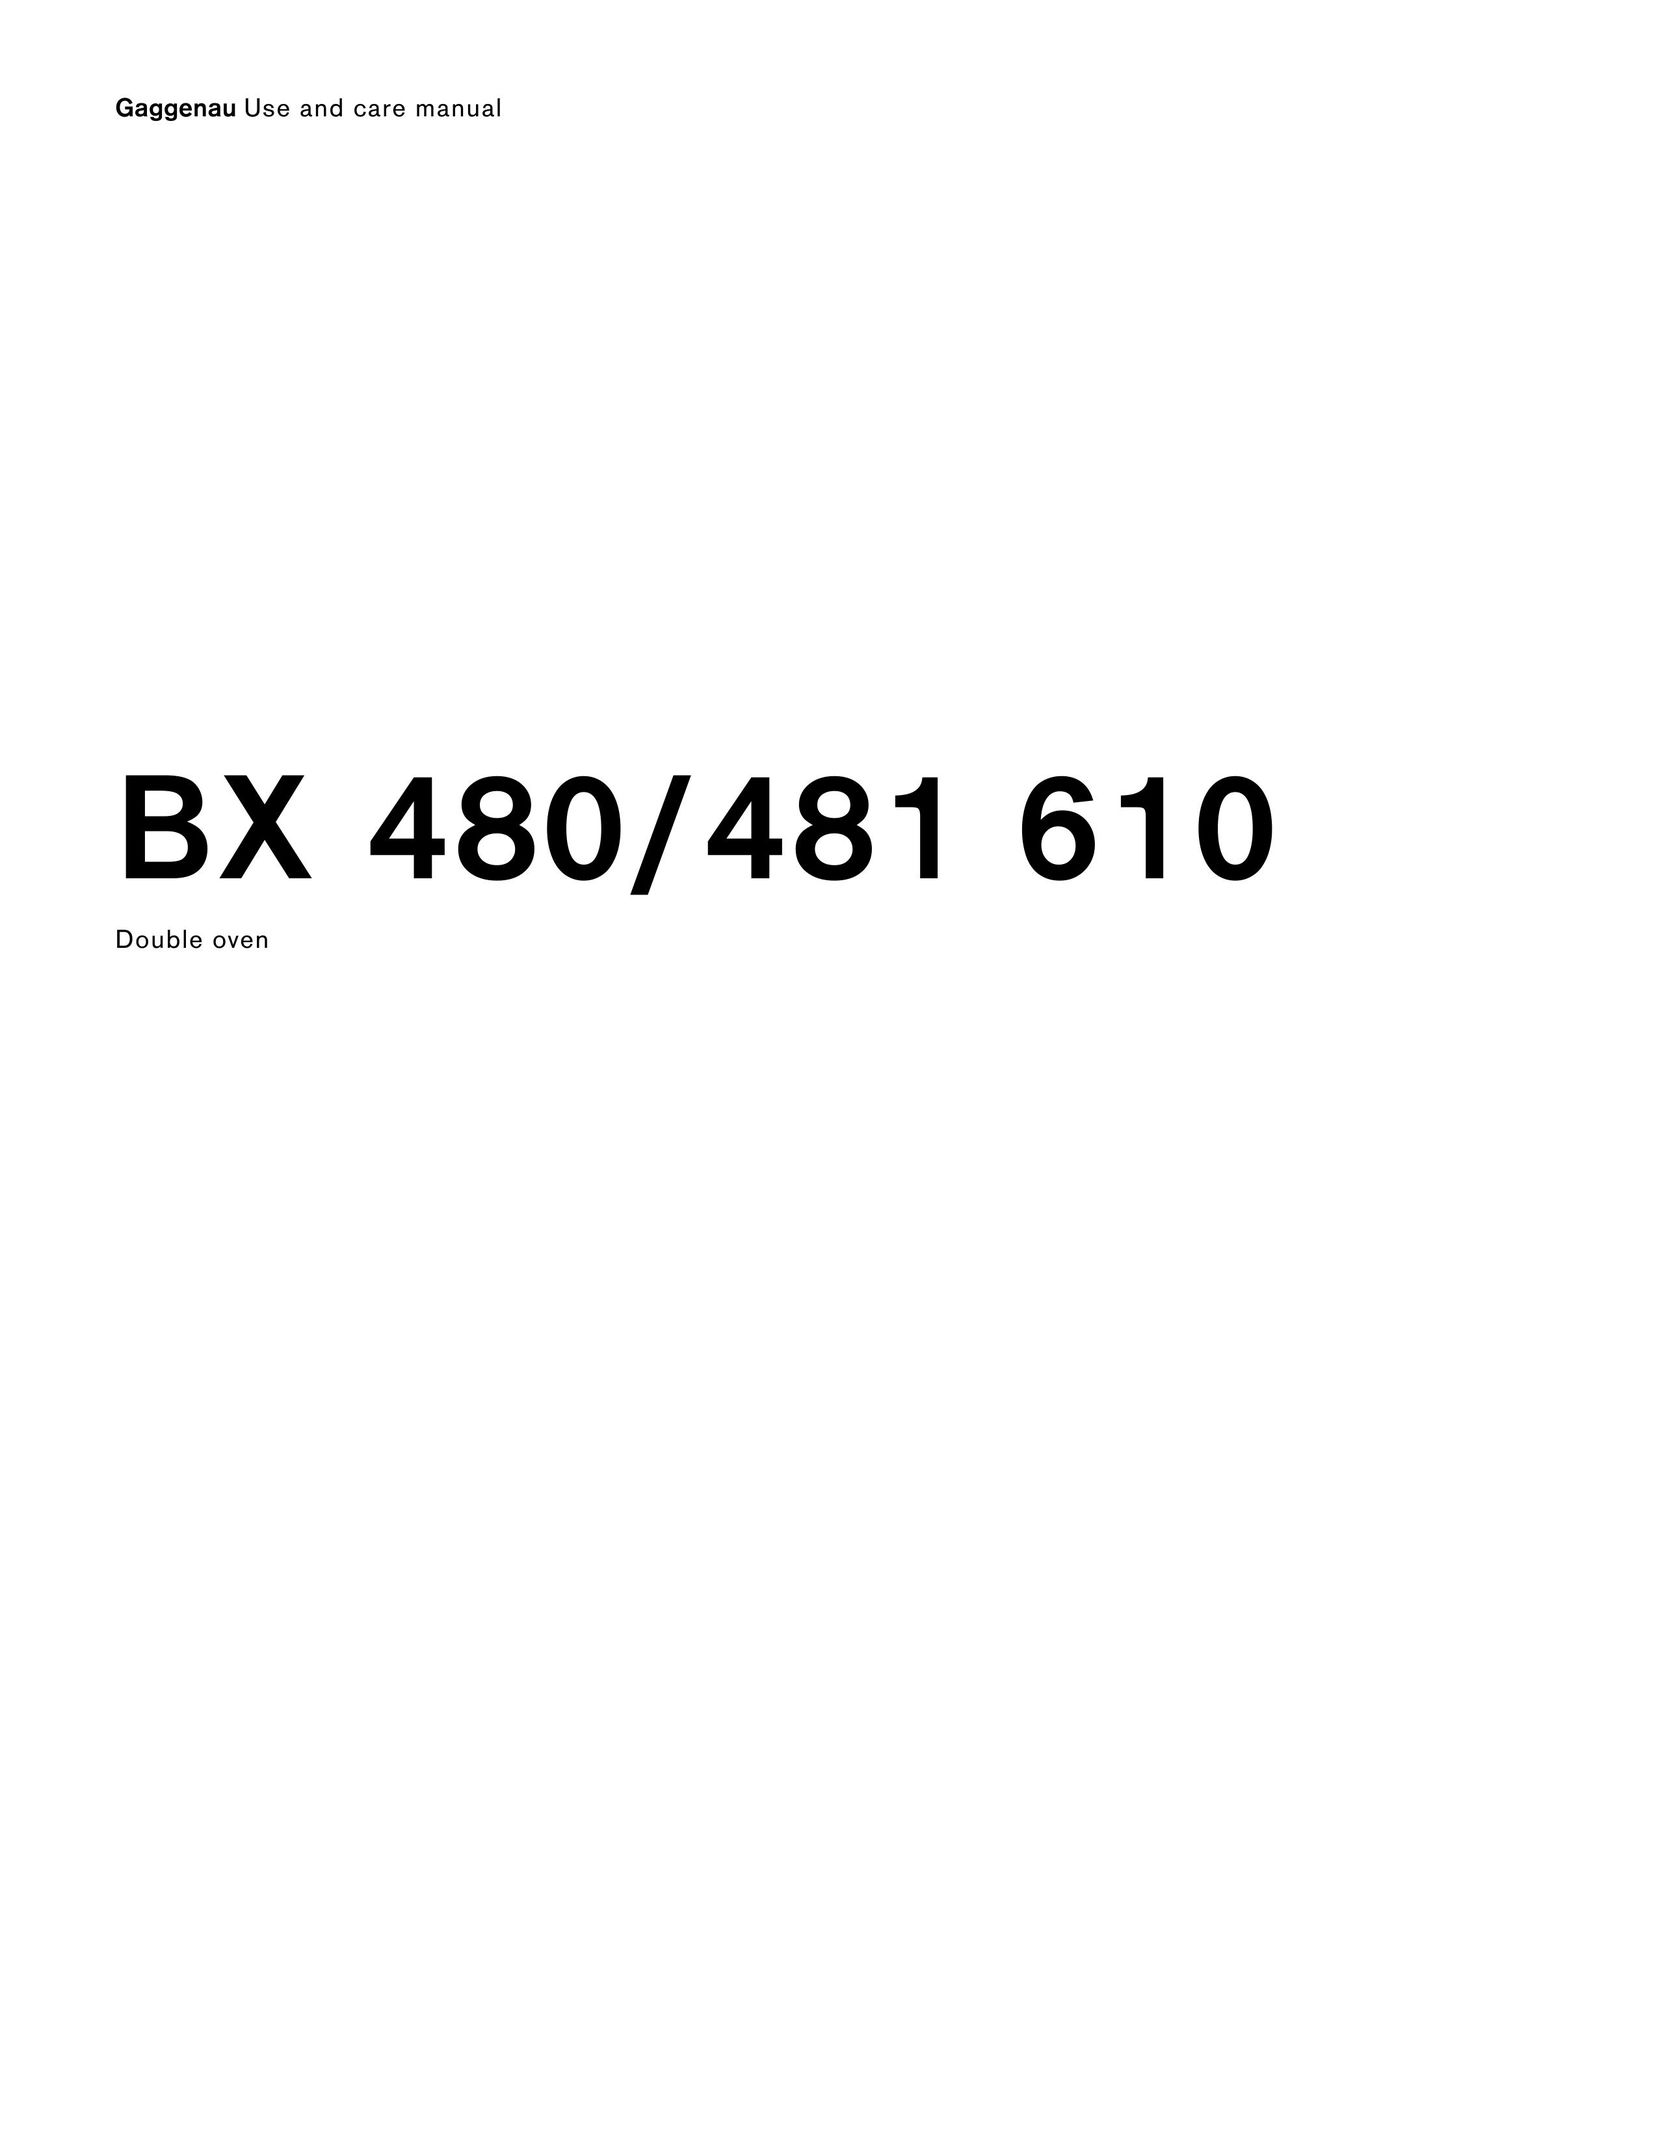 Gaggenau BX 480/481 610 Double Oven User Manual